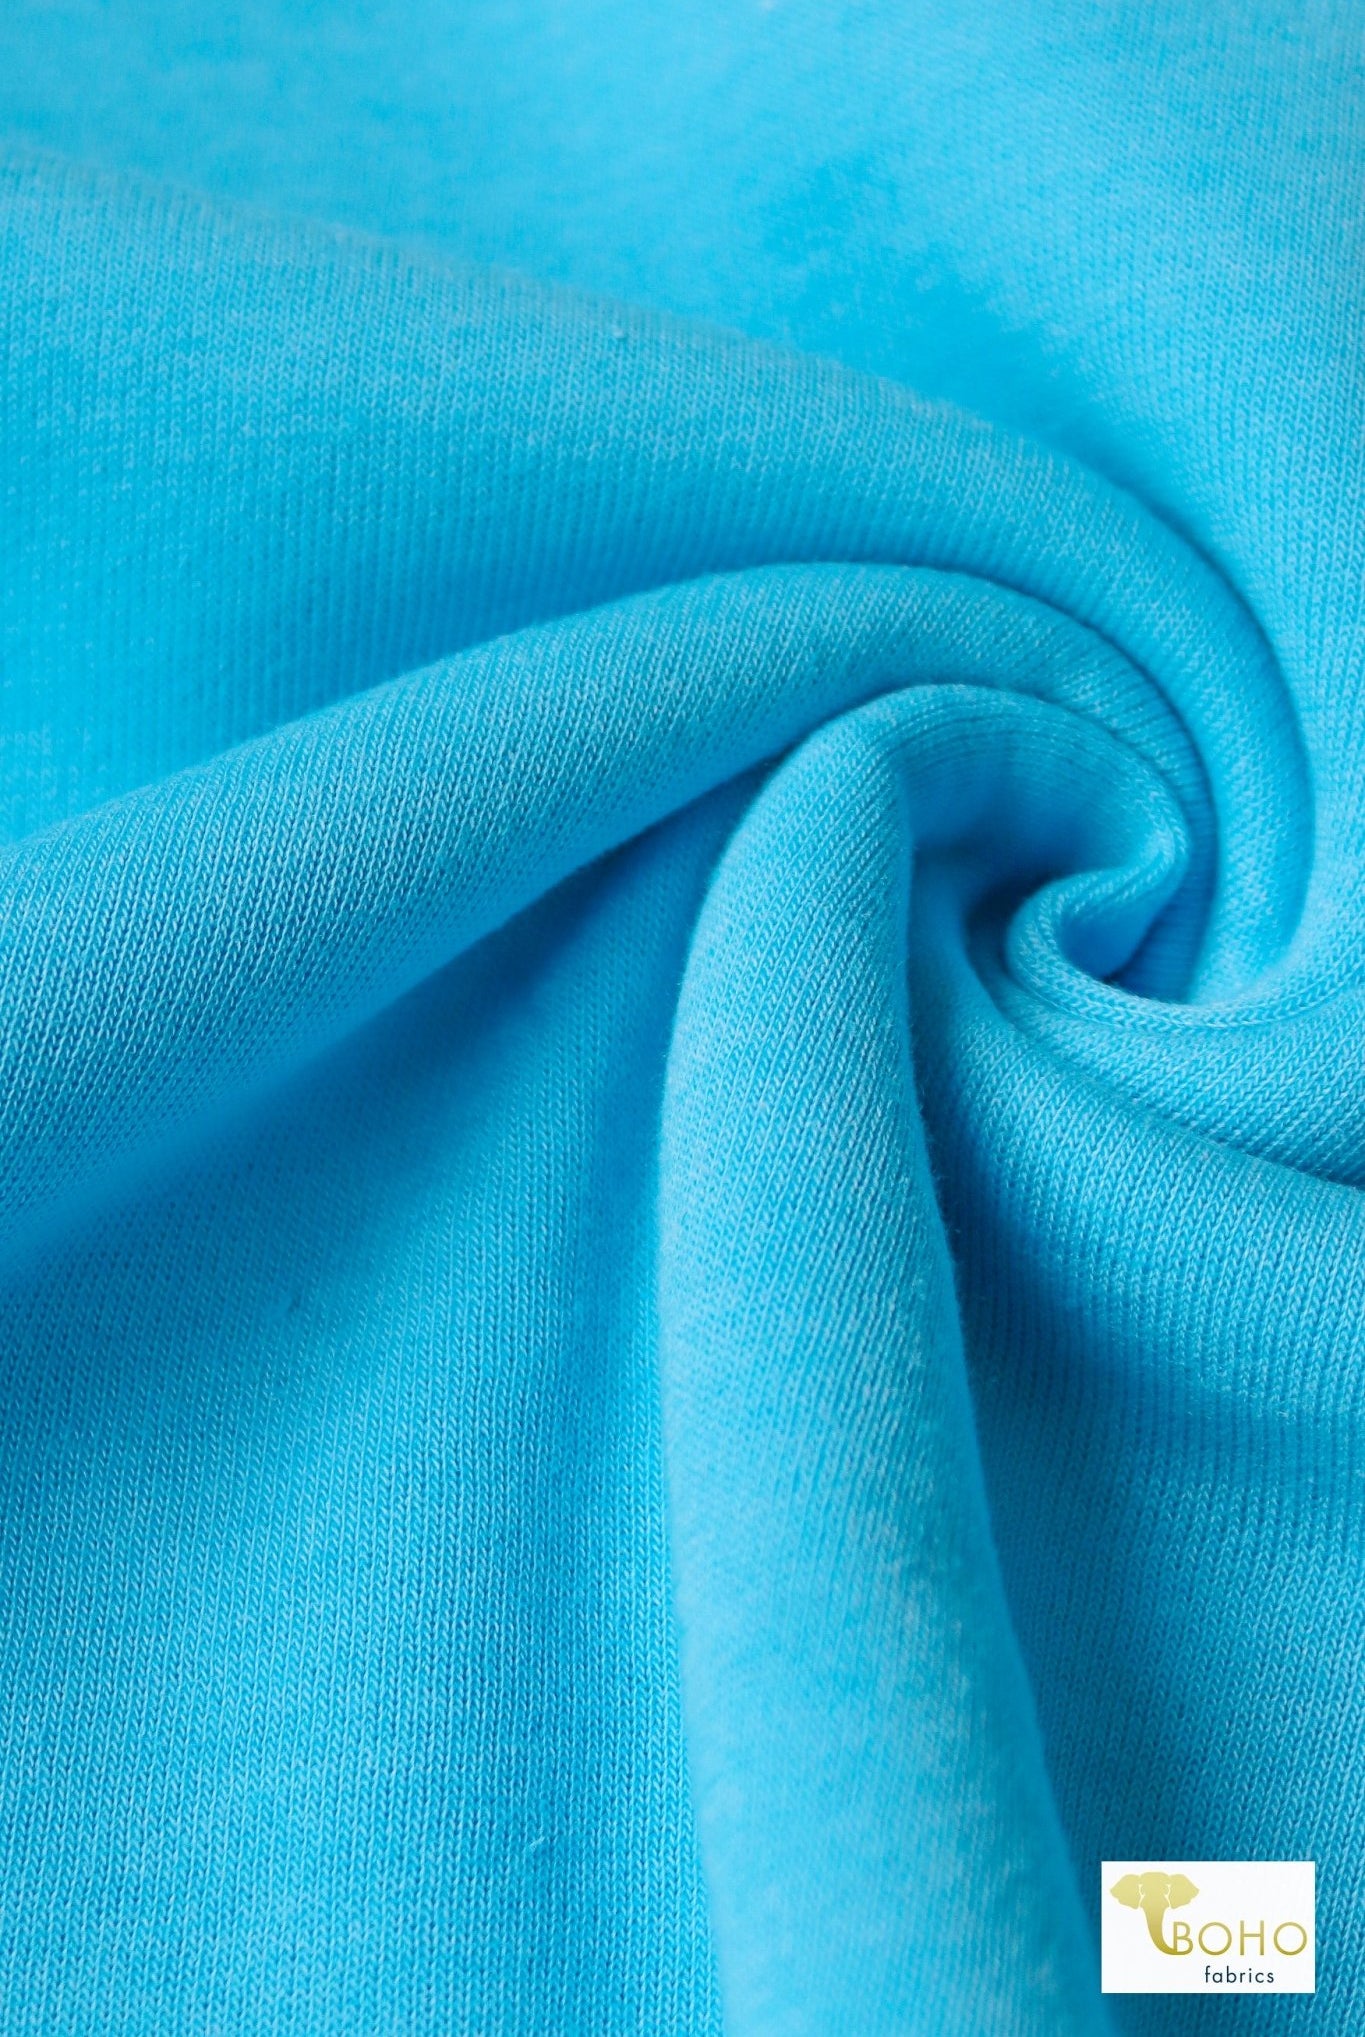 Ultra Marine Blue, Sweatshirt Fleece. - Boho Fabrics